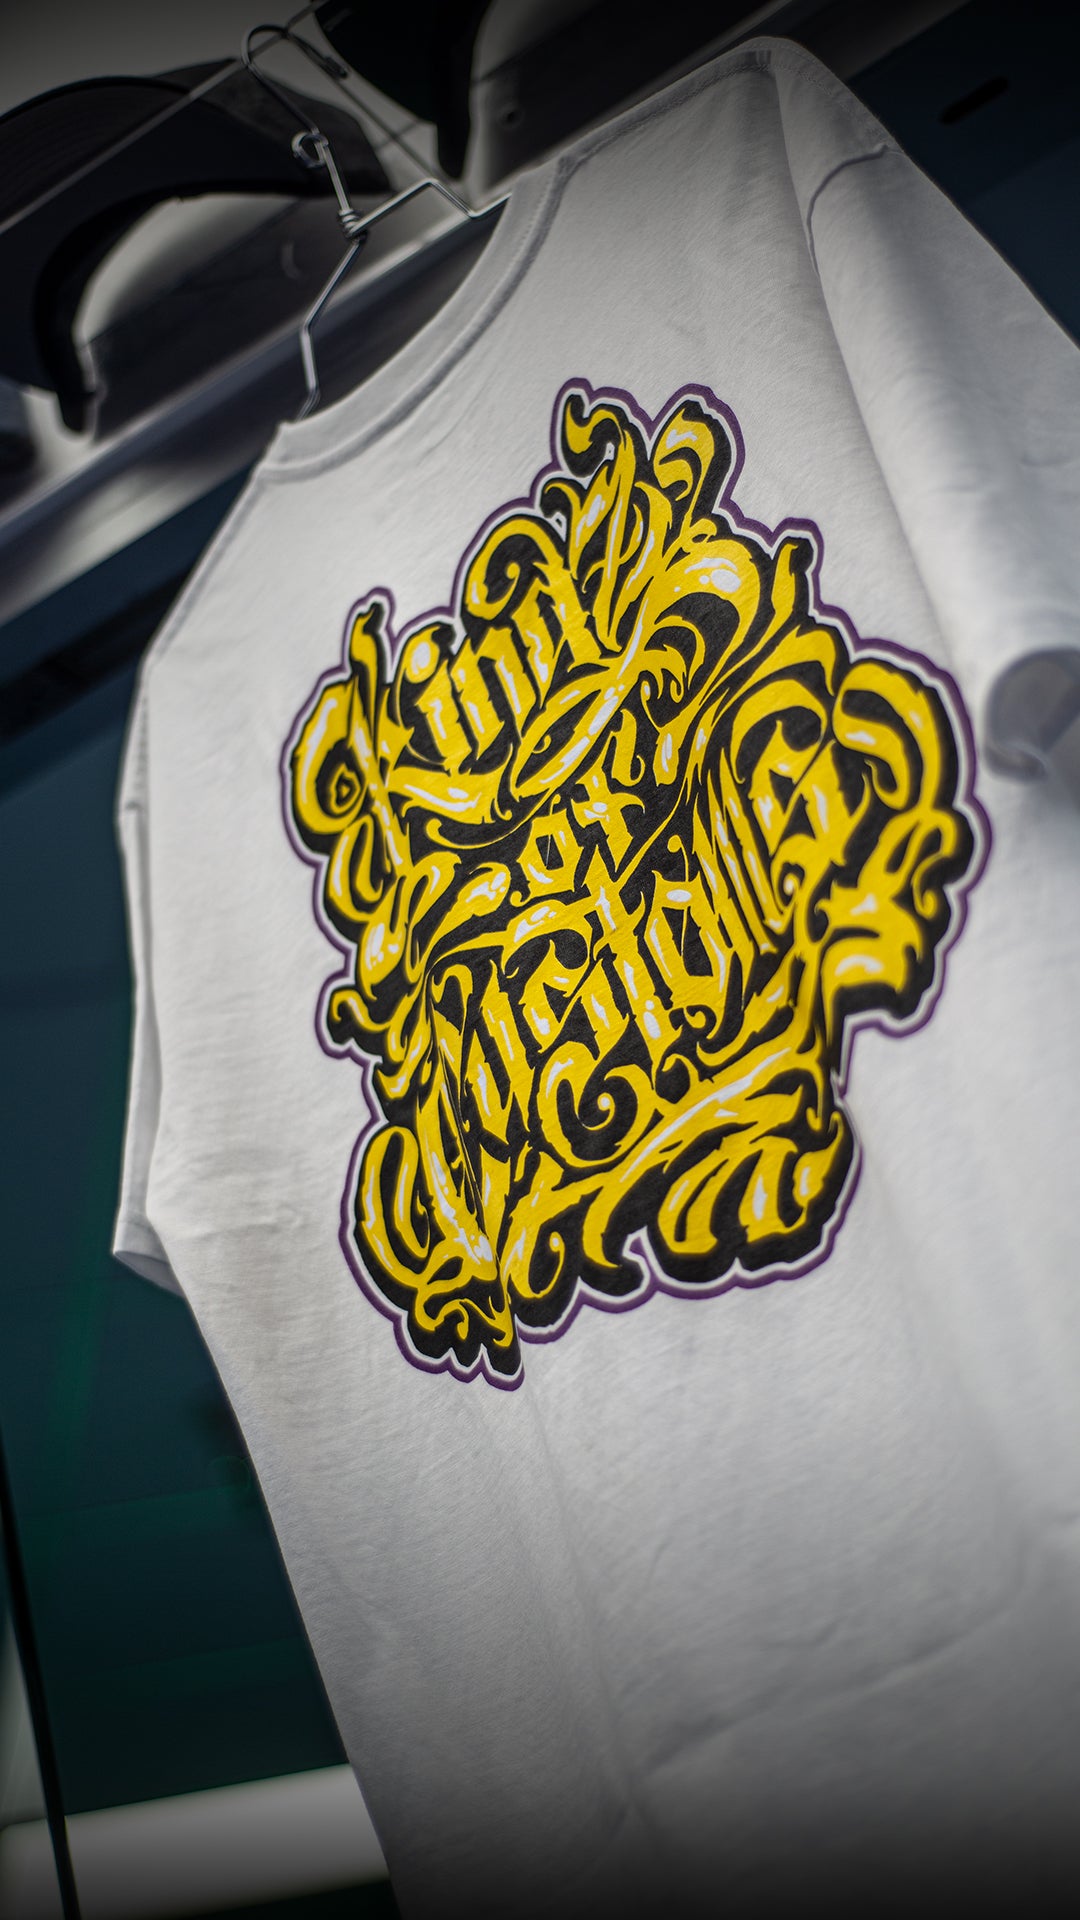 Kingz of Customs T-Shirt – West Coast Customs Online Store